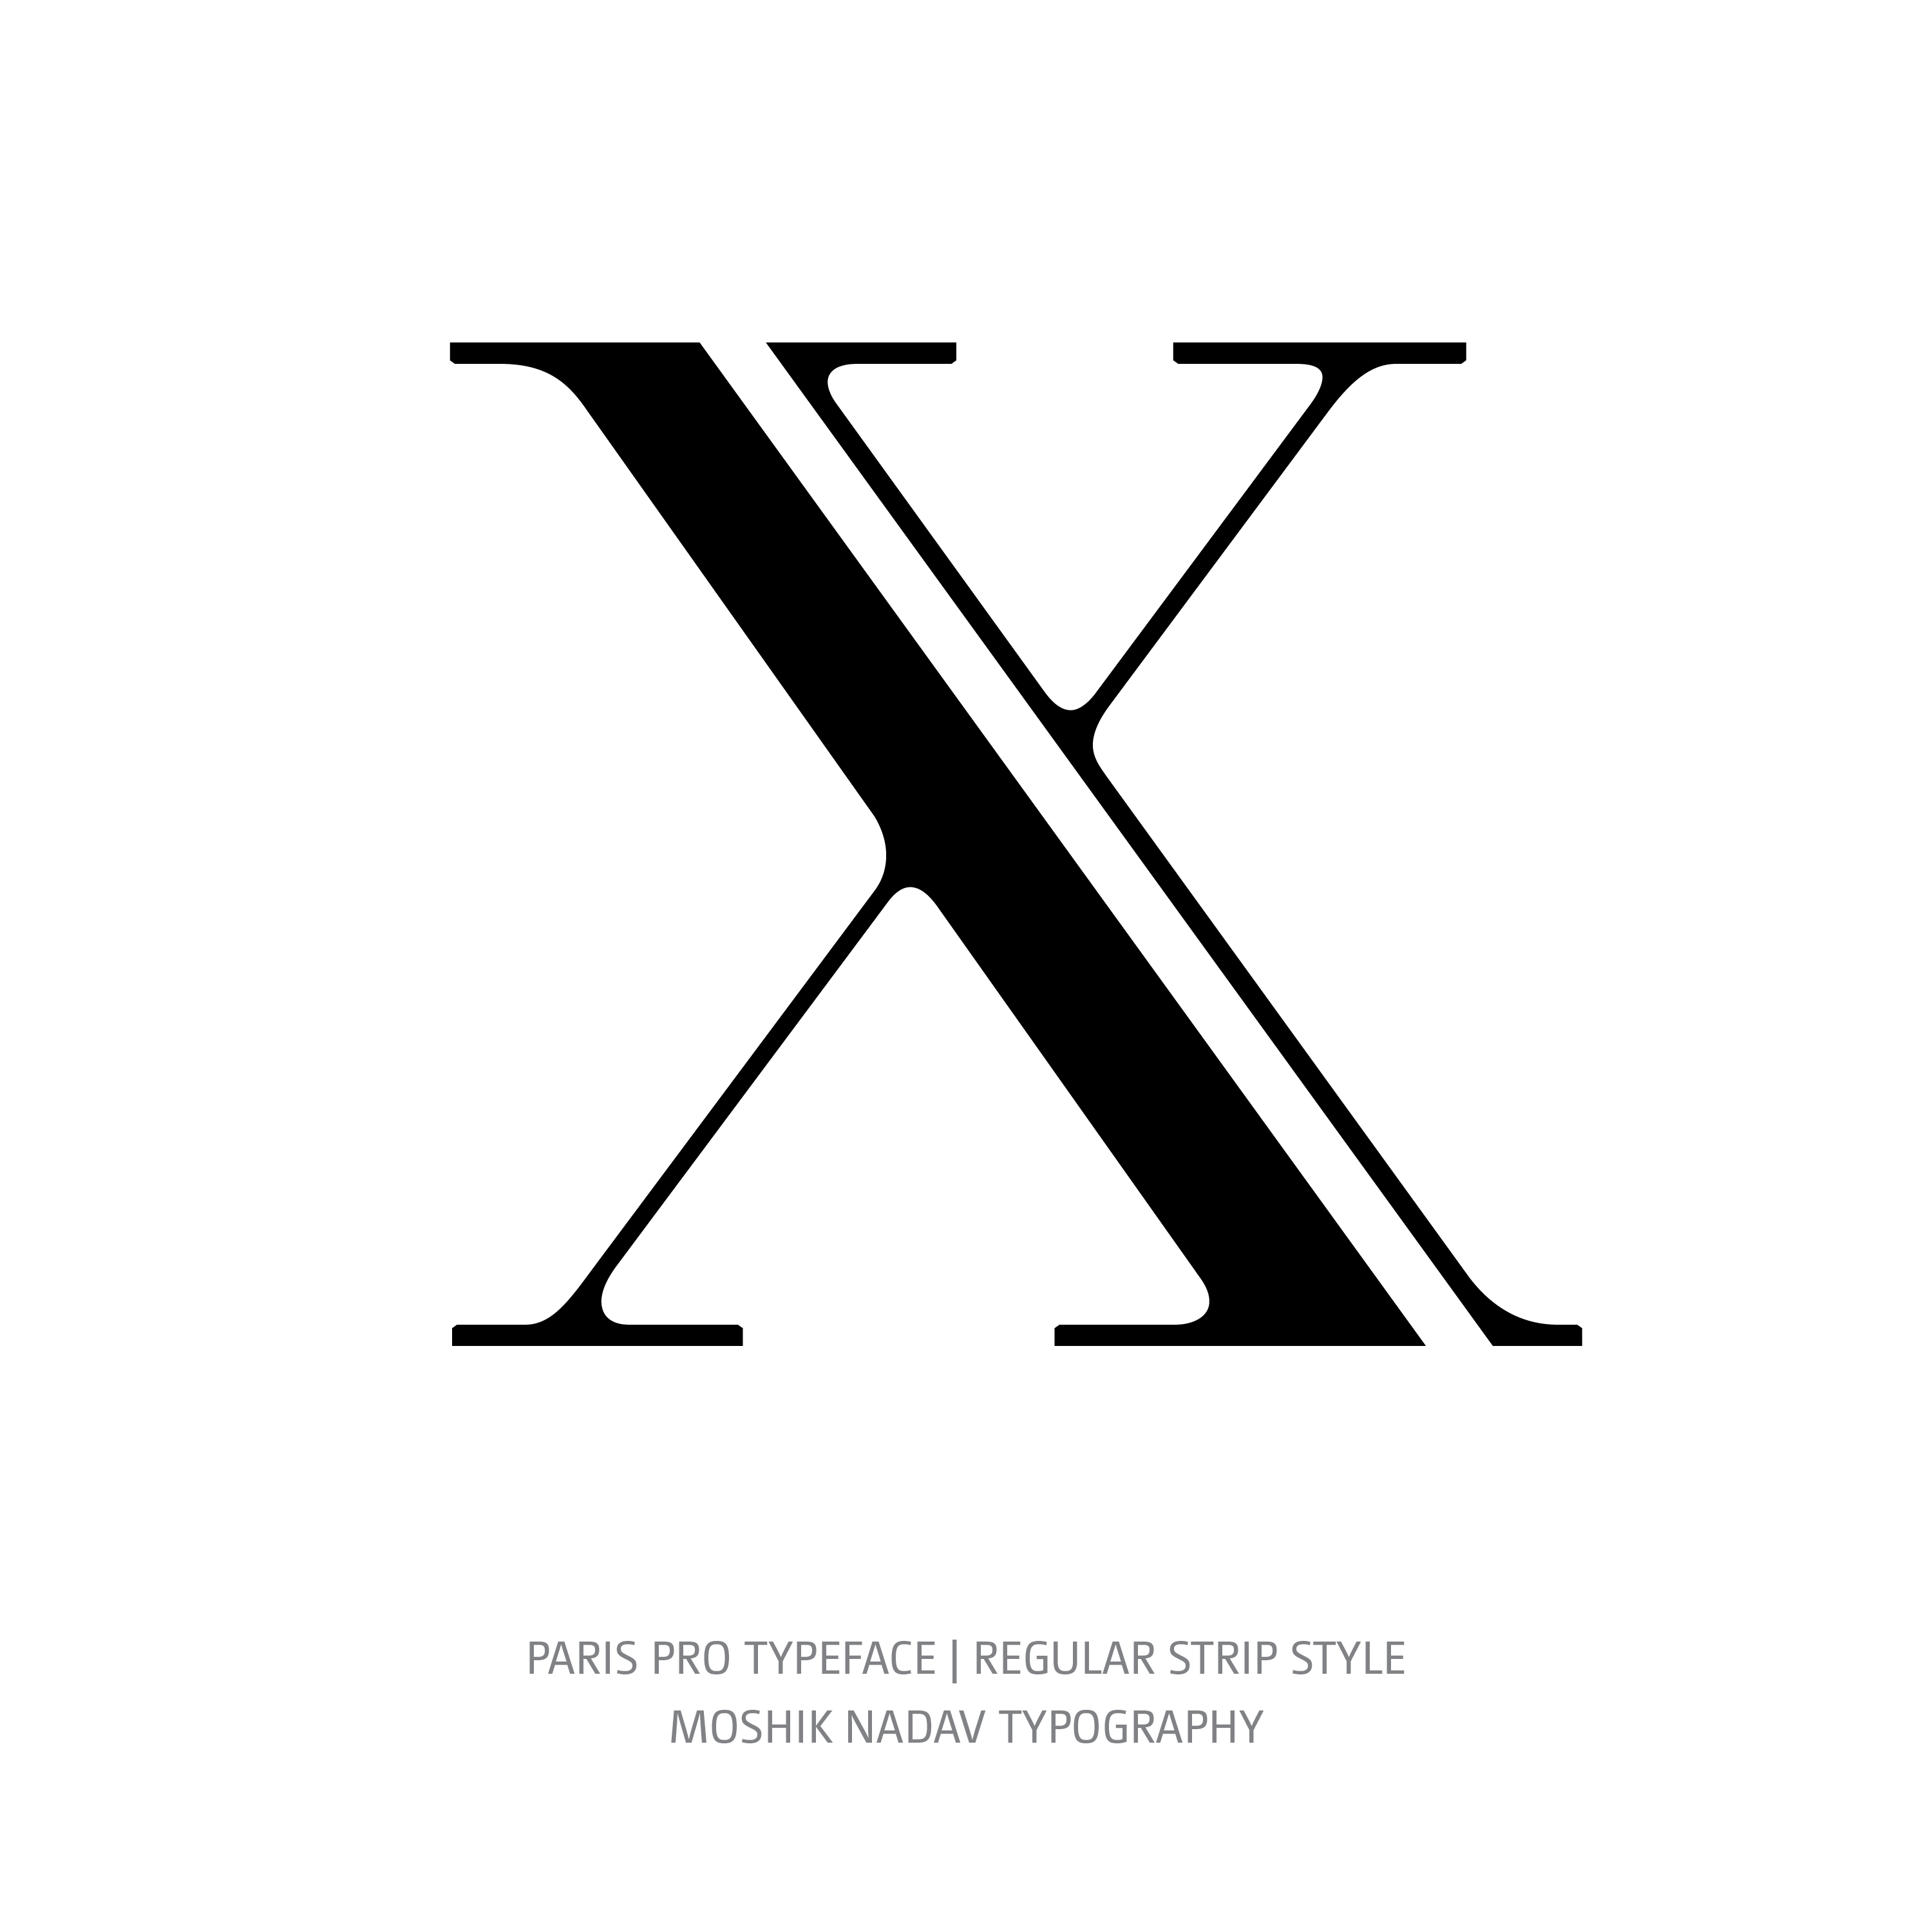 Paris Pro Typeface Regular Strip X